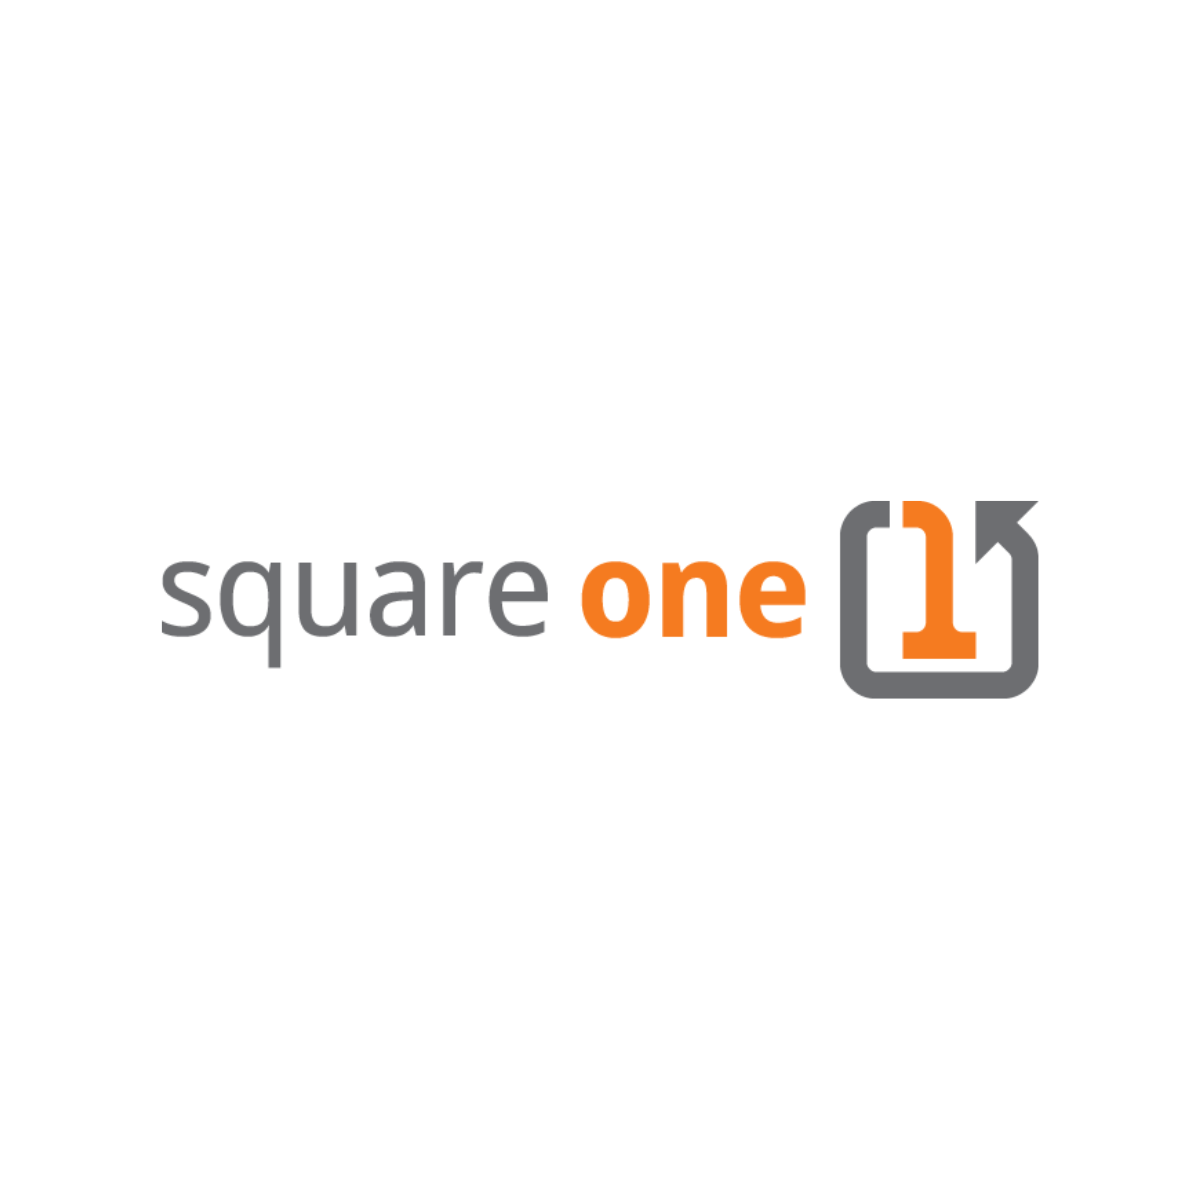 SquareOne – Help, Inc